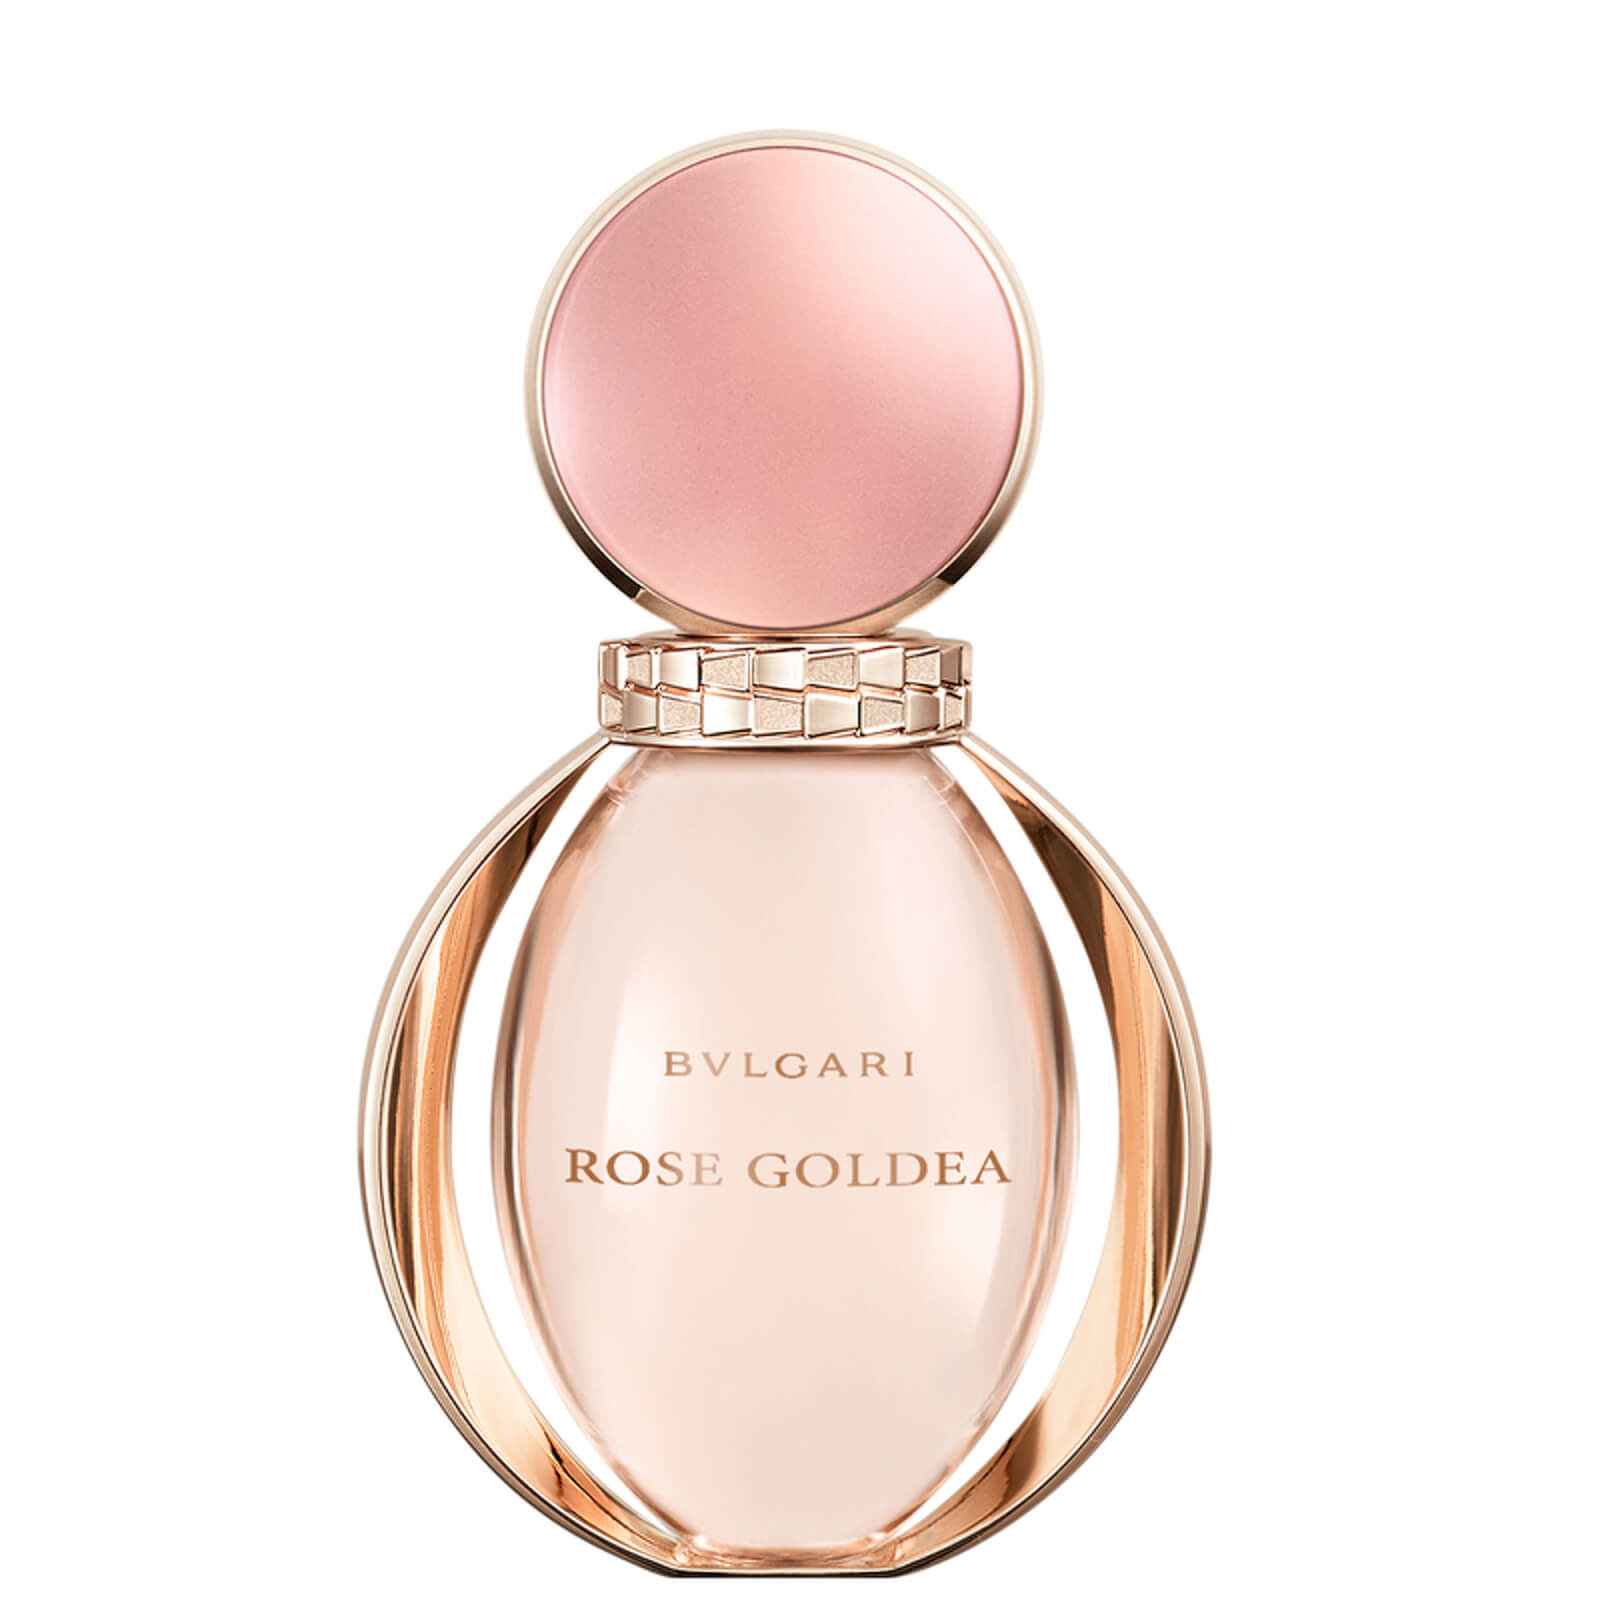 Photos - Women's Fragrance Bvlgari Bulgari Rose Goldea Eau de Parfum Spray 50ml 31272 